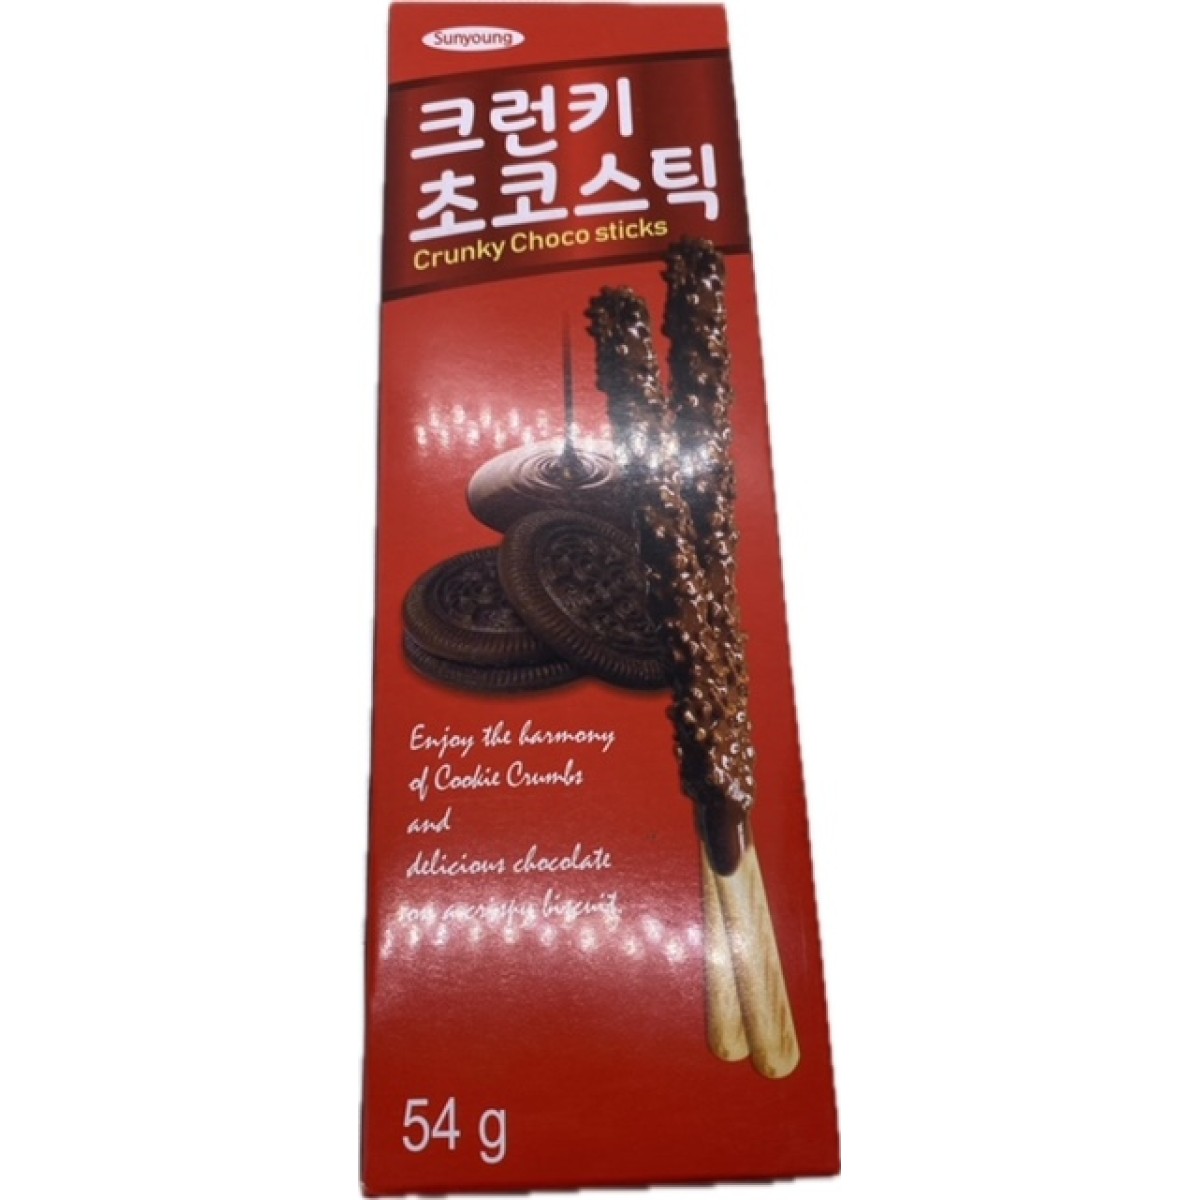 Sunyoung crunky choco sticks